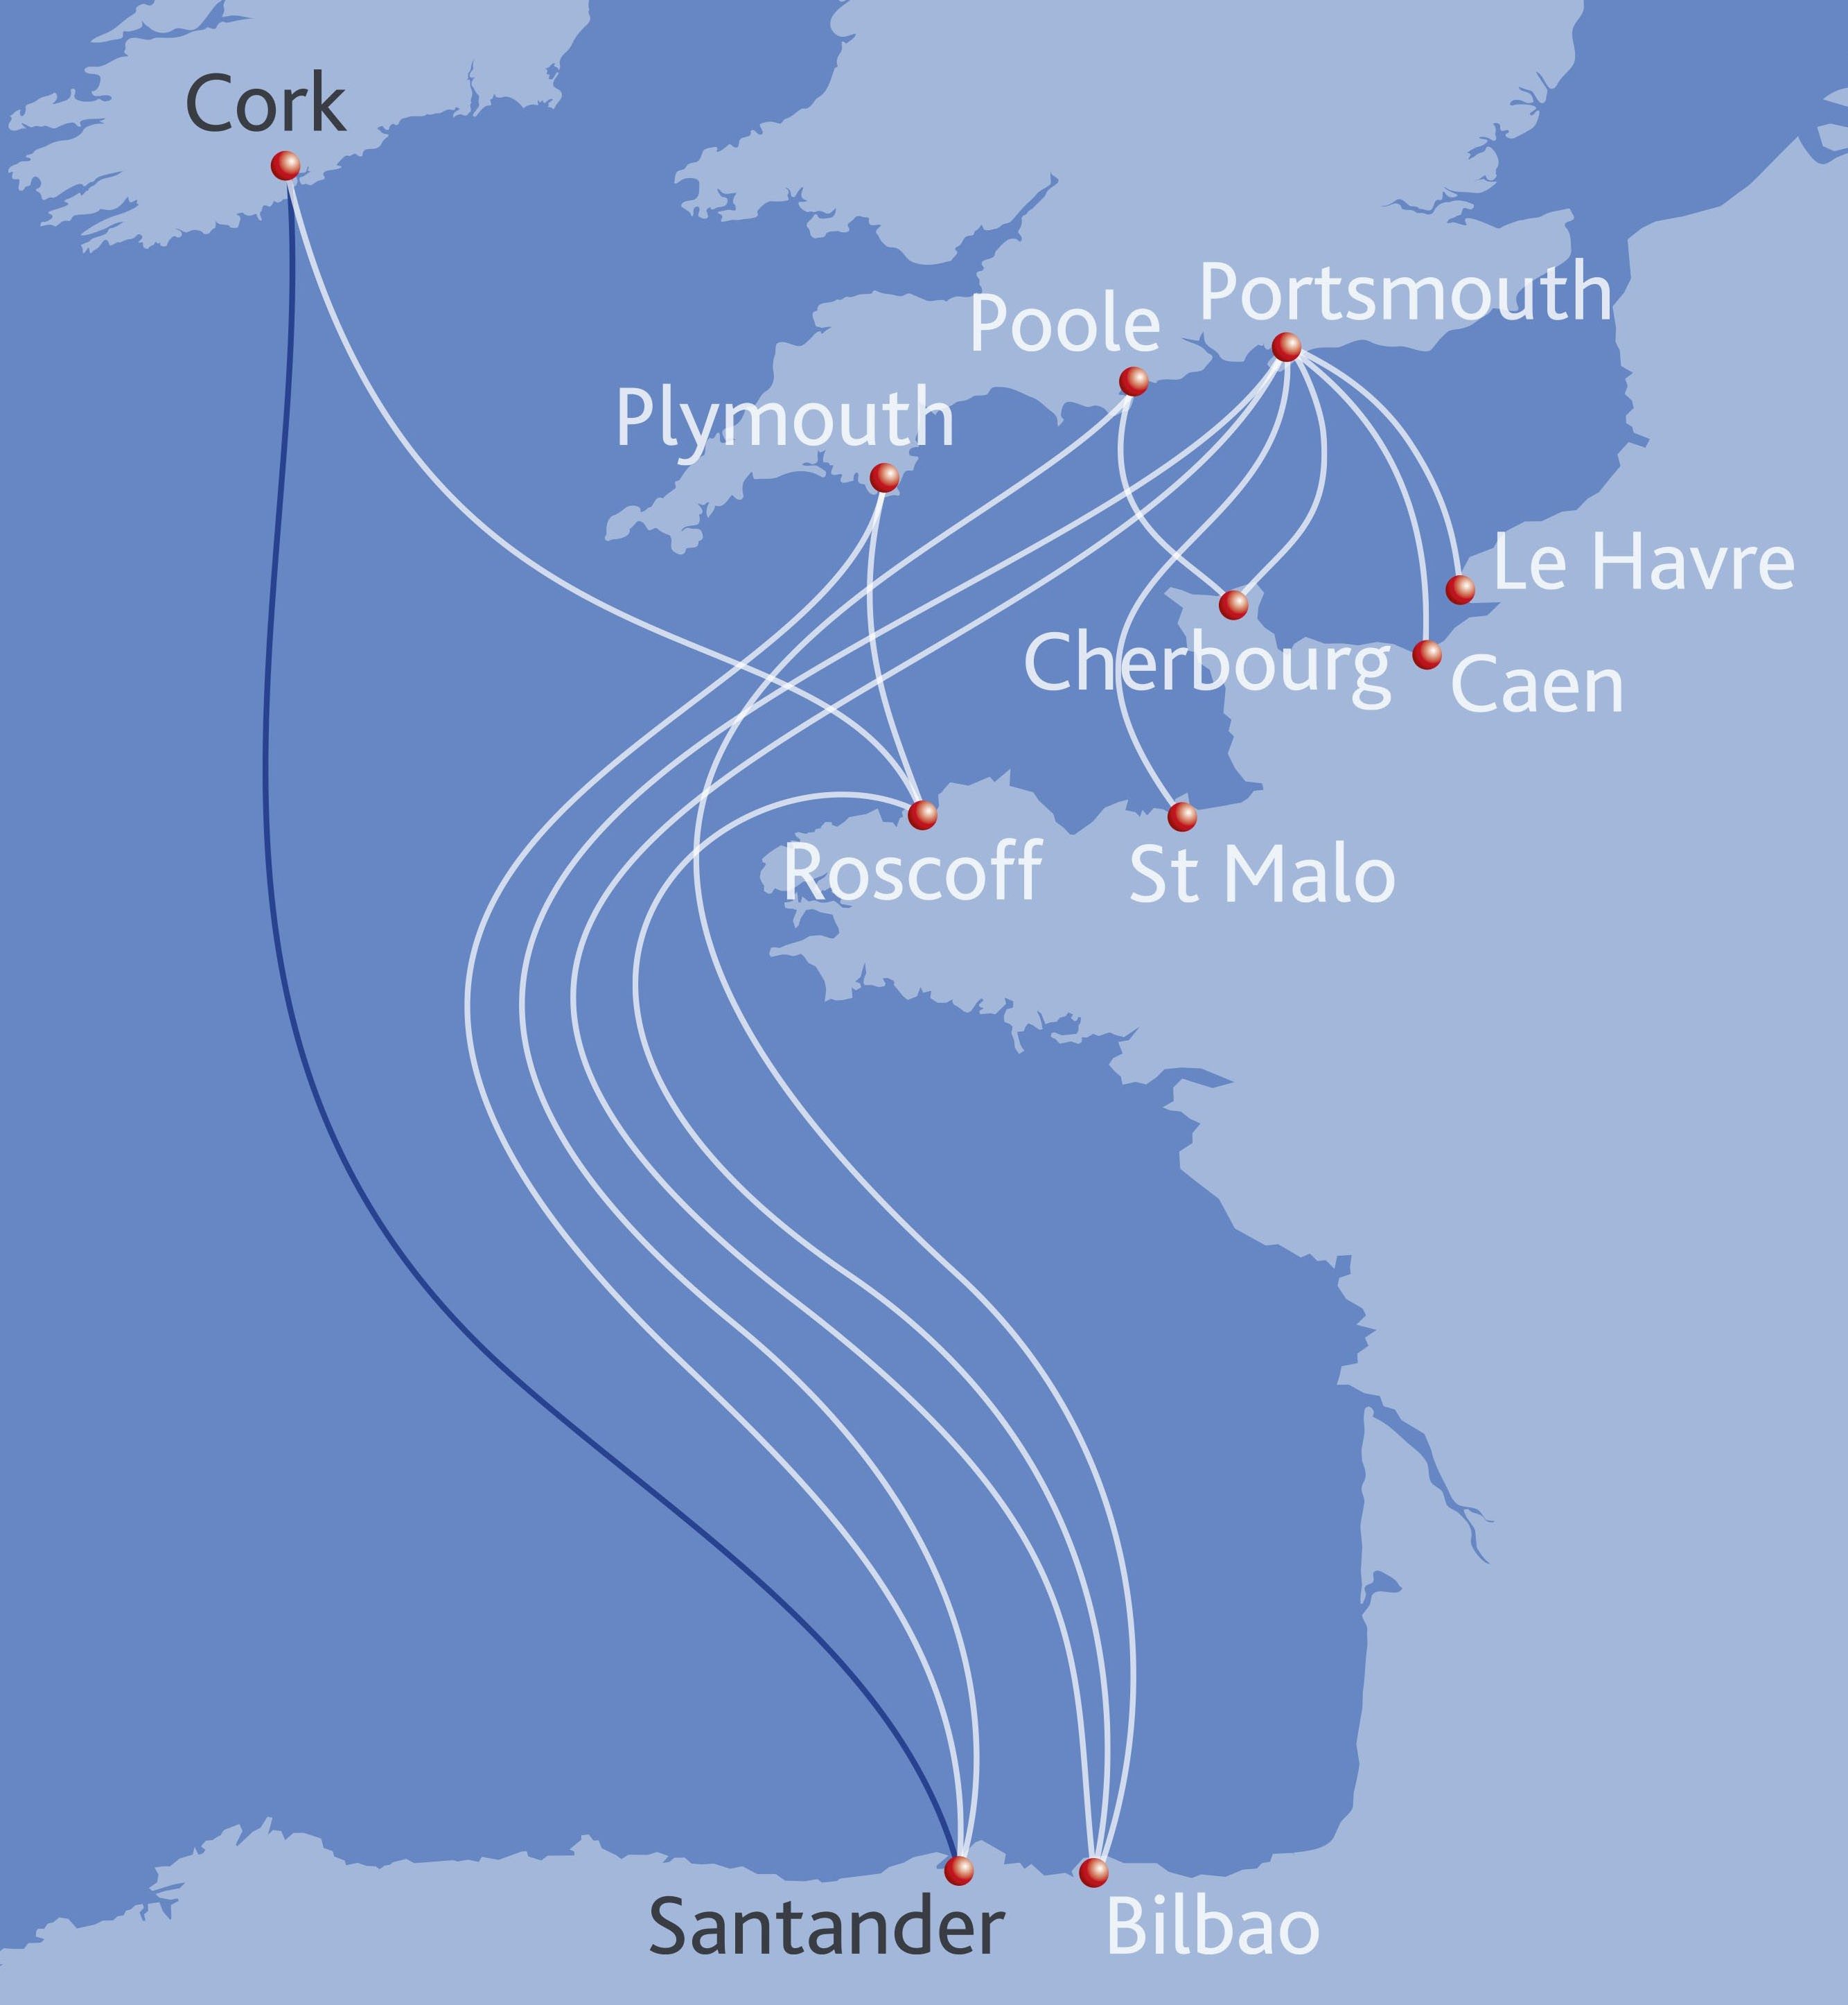 Lignes maritimes Brittany Ferries